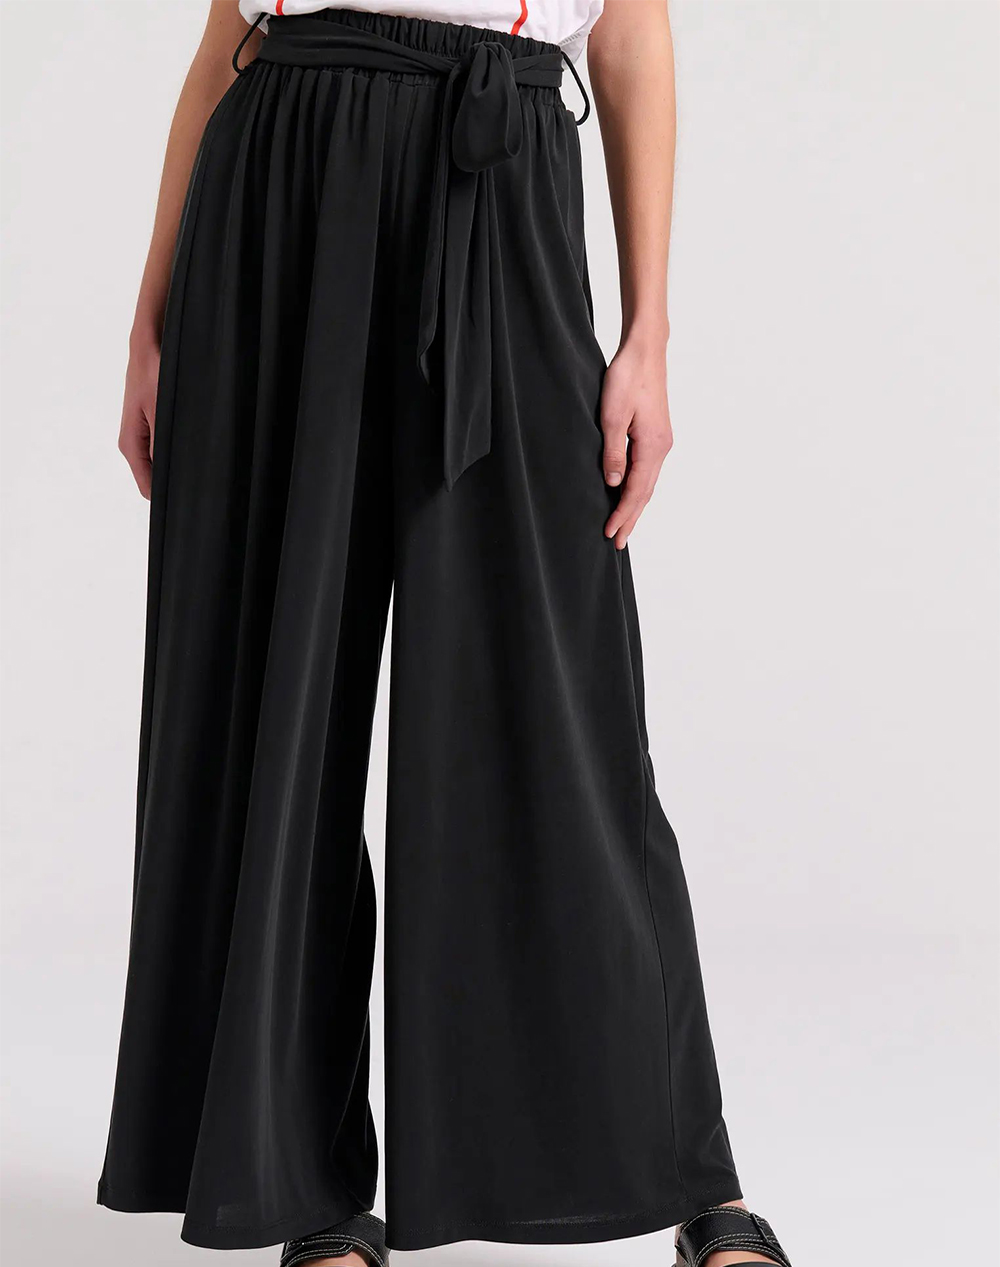 FUNKY BUDDHA Loose fit παντελόνα με ελαστική μέση και ζώνη FBL009-105-02-BLACK Black